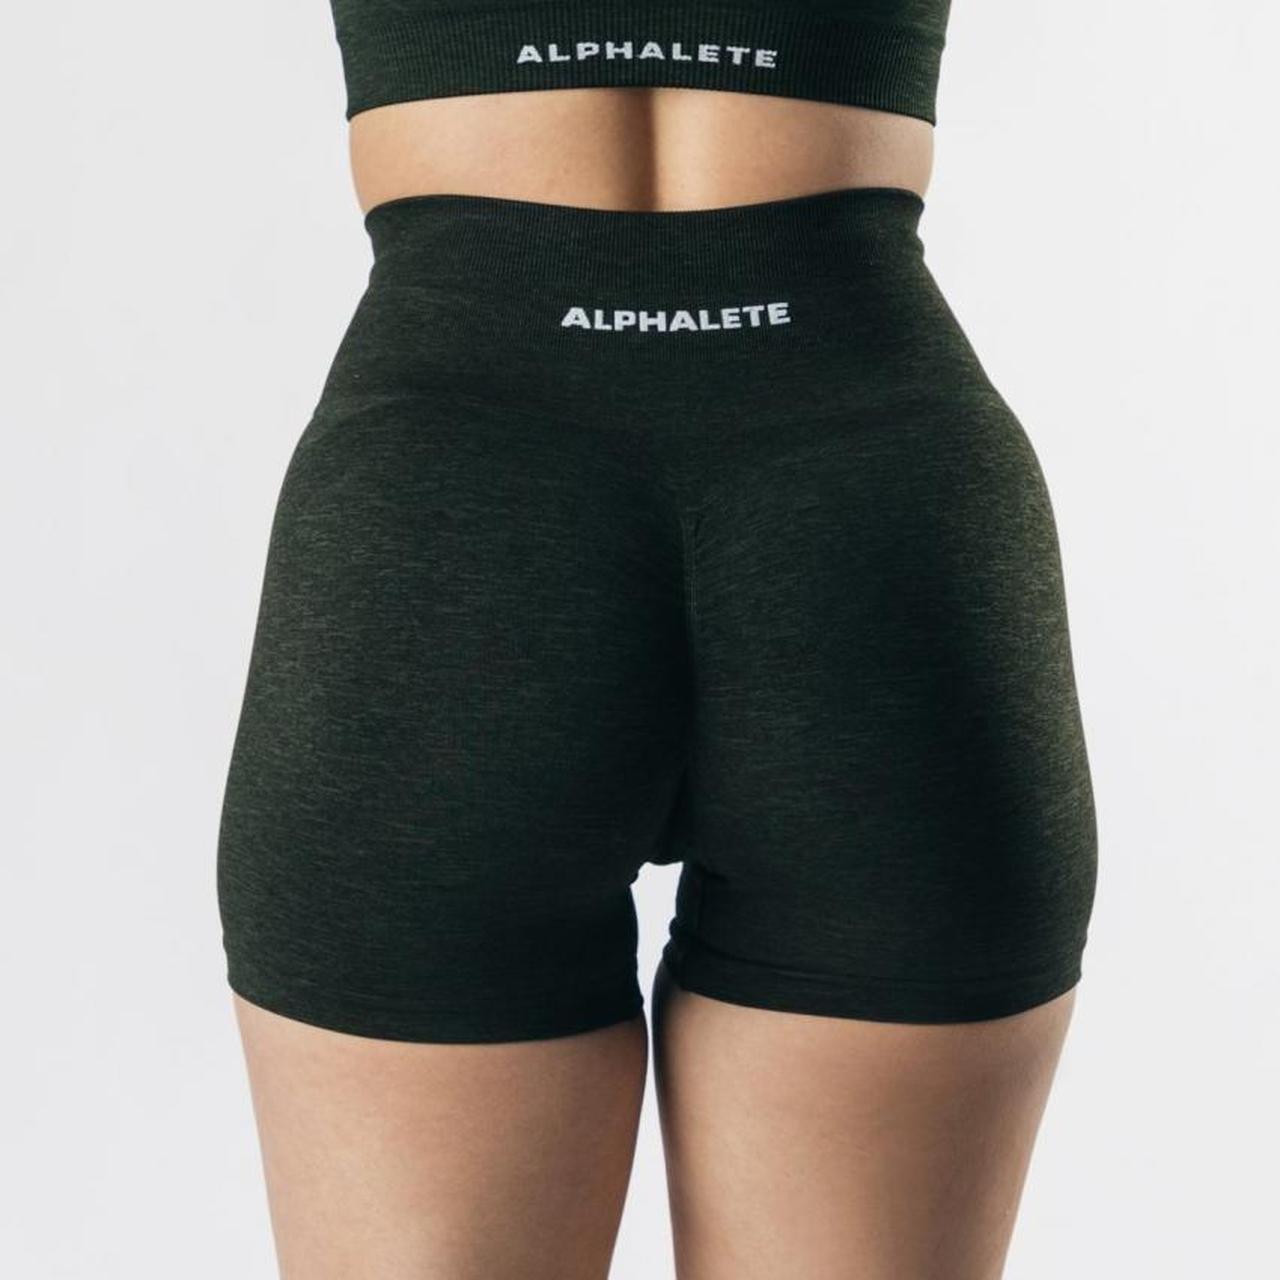 Alphalete Amplify Biker Shorts - Bordeaux - XS - NWOT!